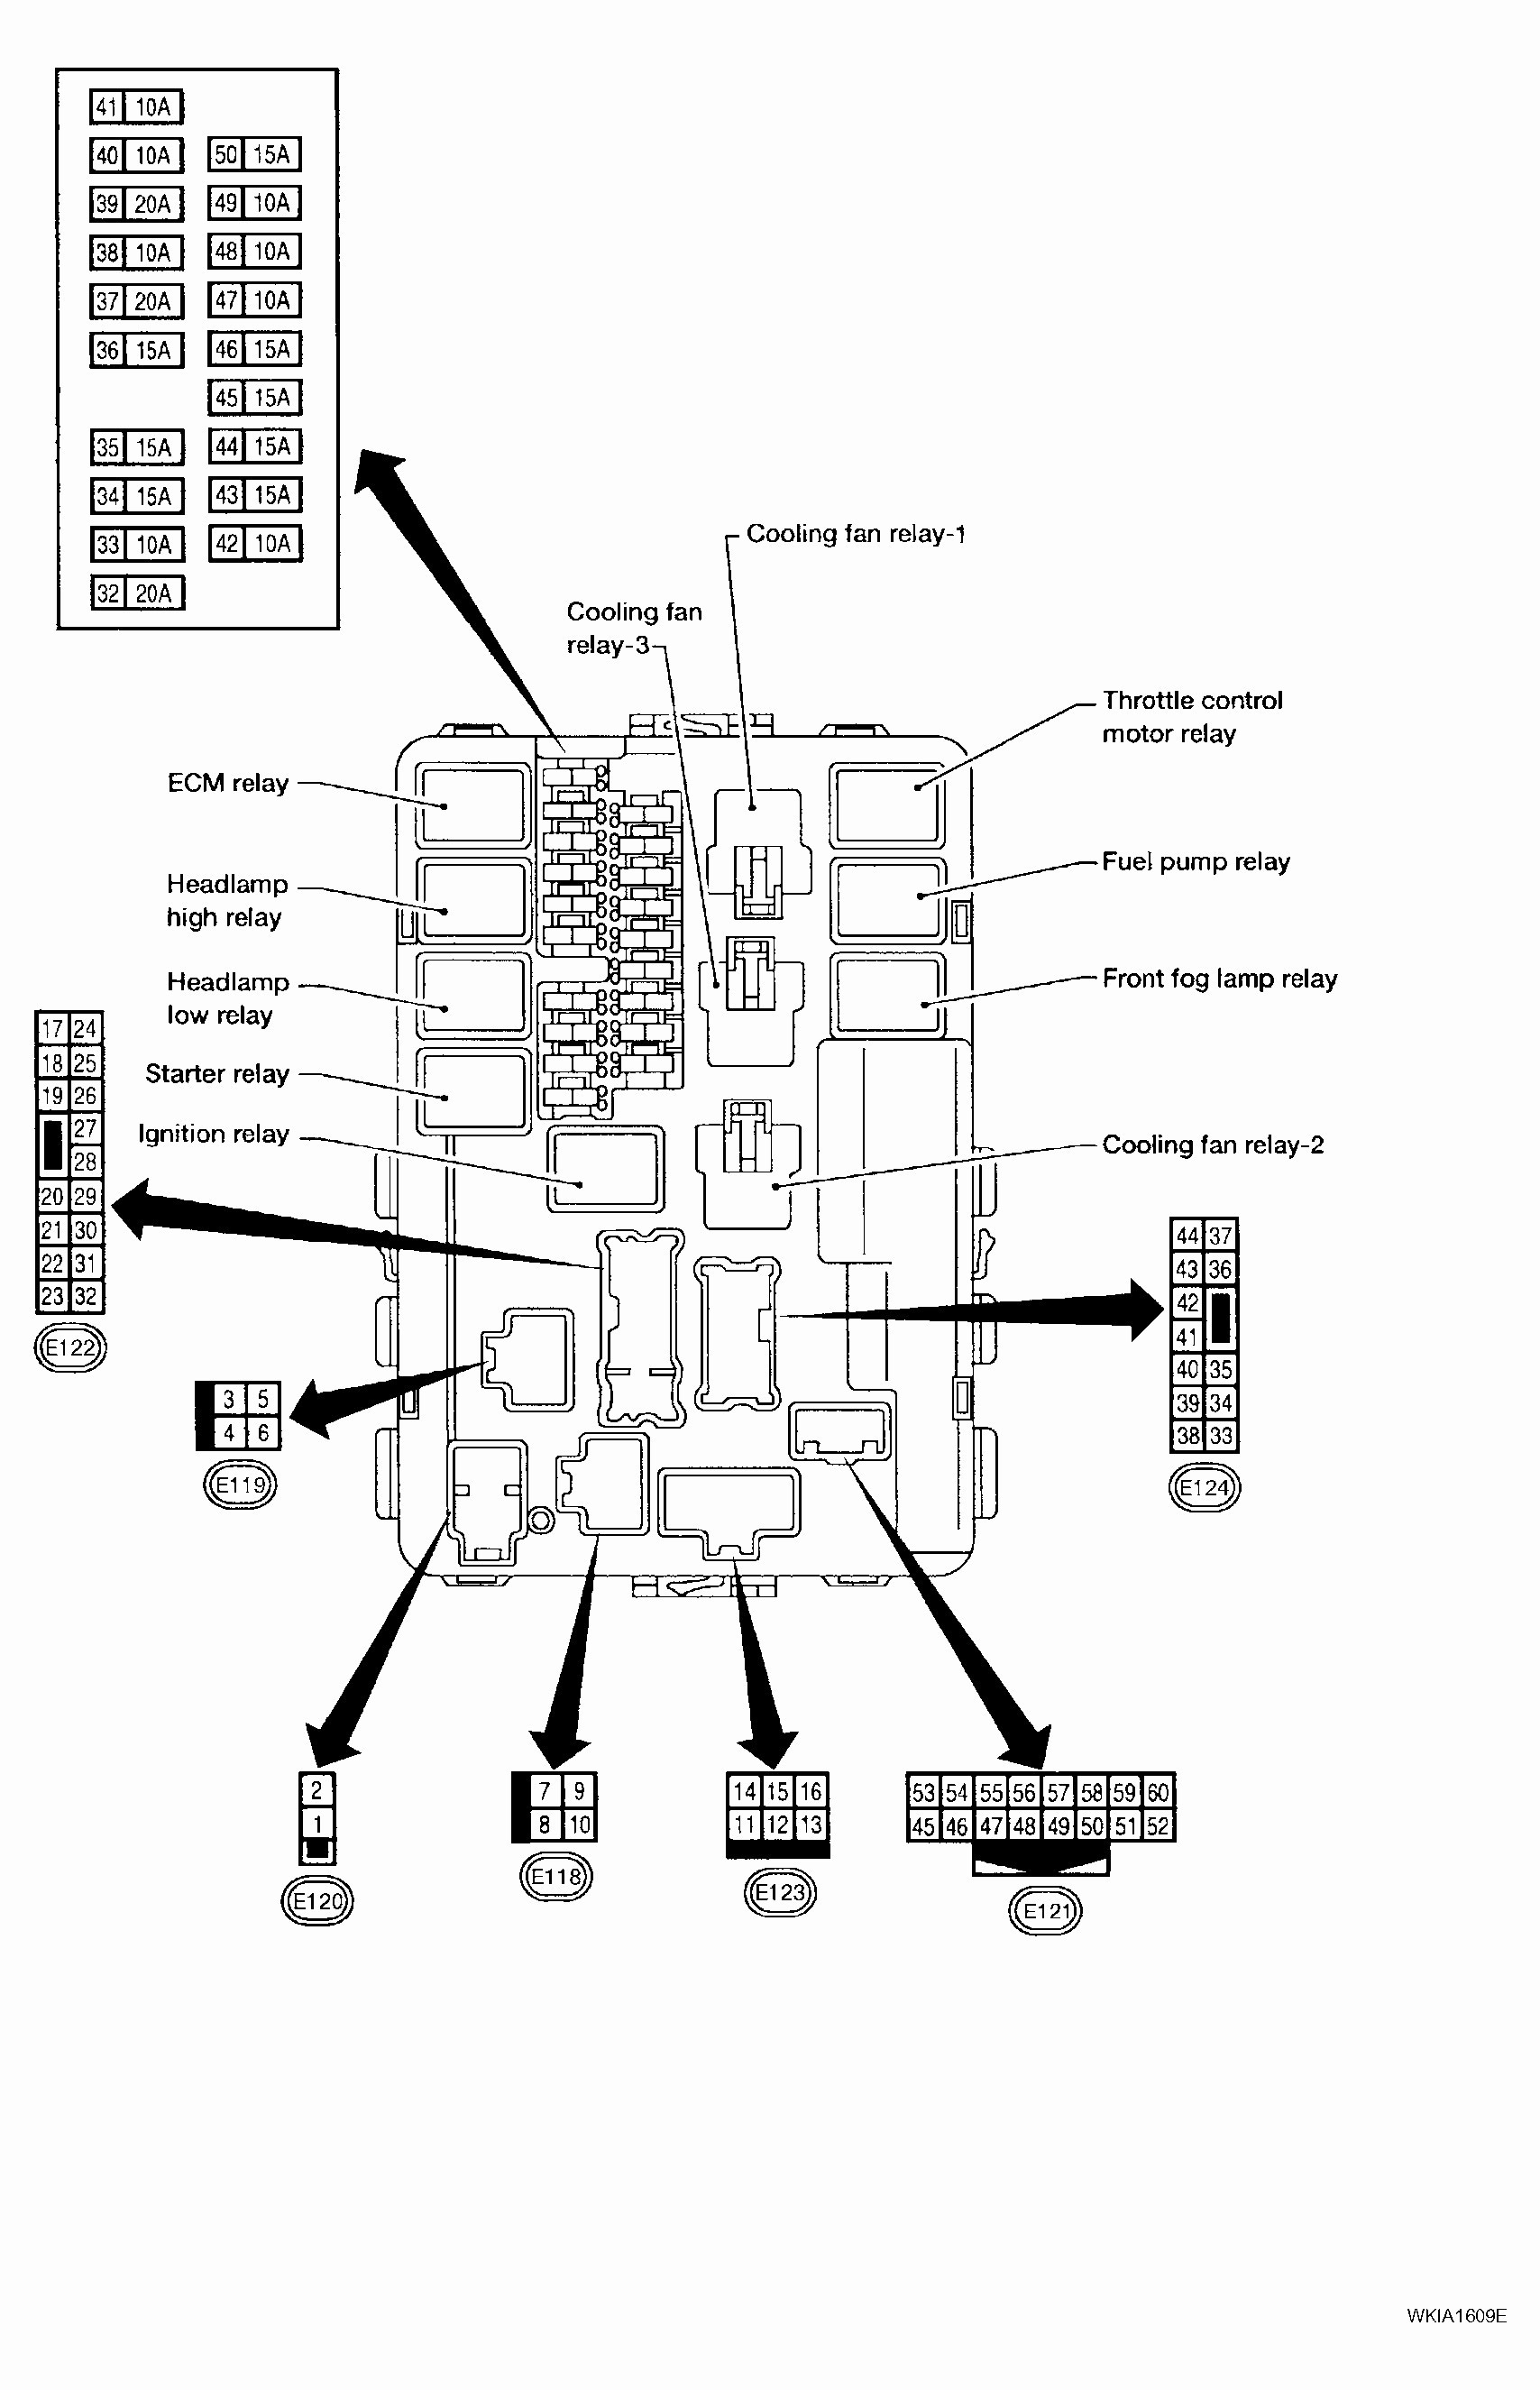 2005 Chevy Equinox Engine Diagram 2006 Altima Engine Fuse Box Diagram Schema Wiring Diagram Of 2005 Chevy Equinox Engine Diagram